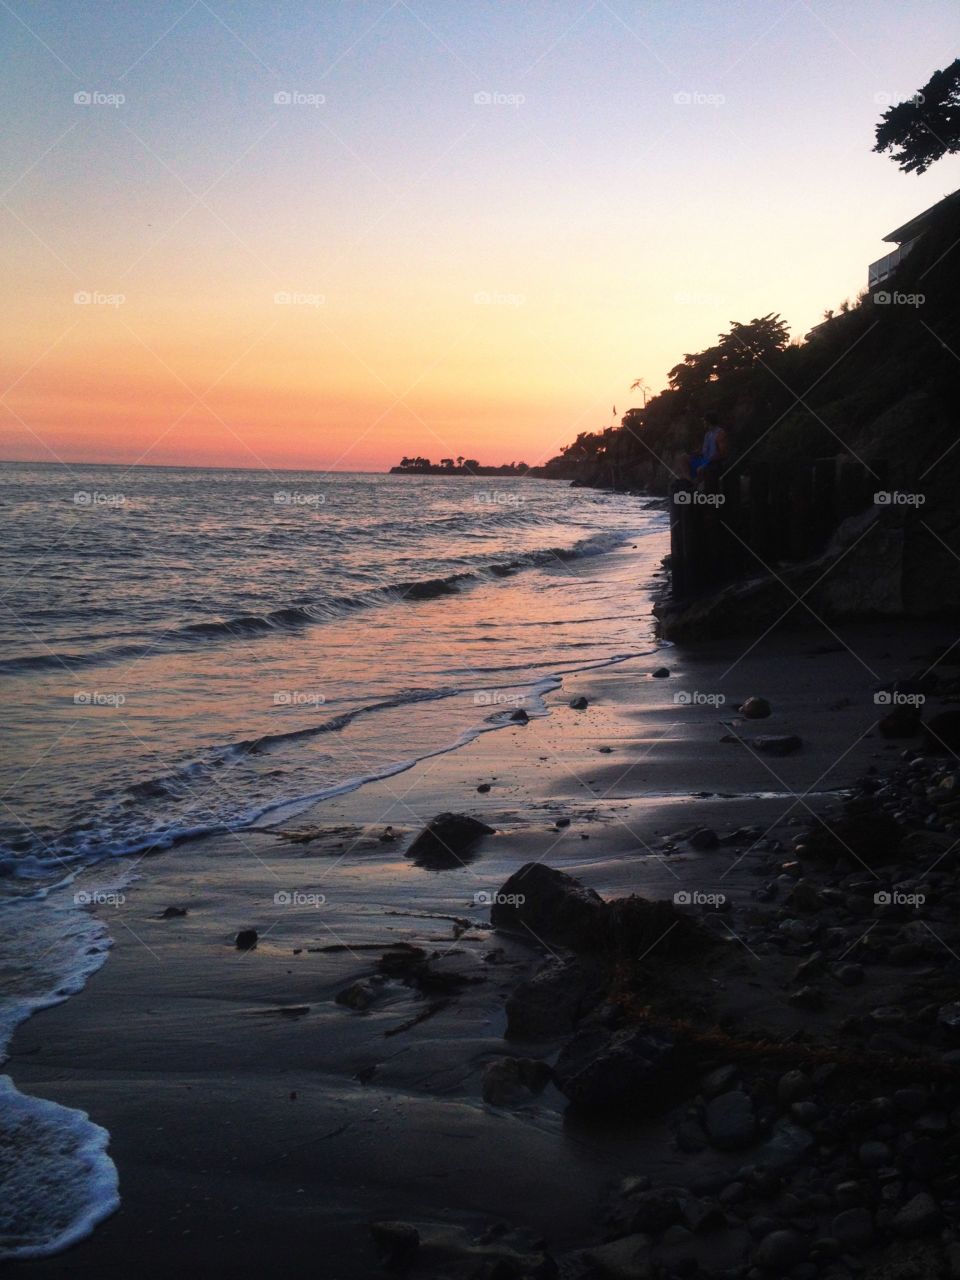 Seaside village beach of Isla Vista, California at dusk 